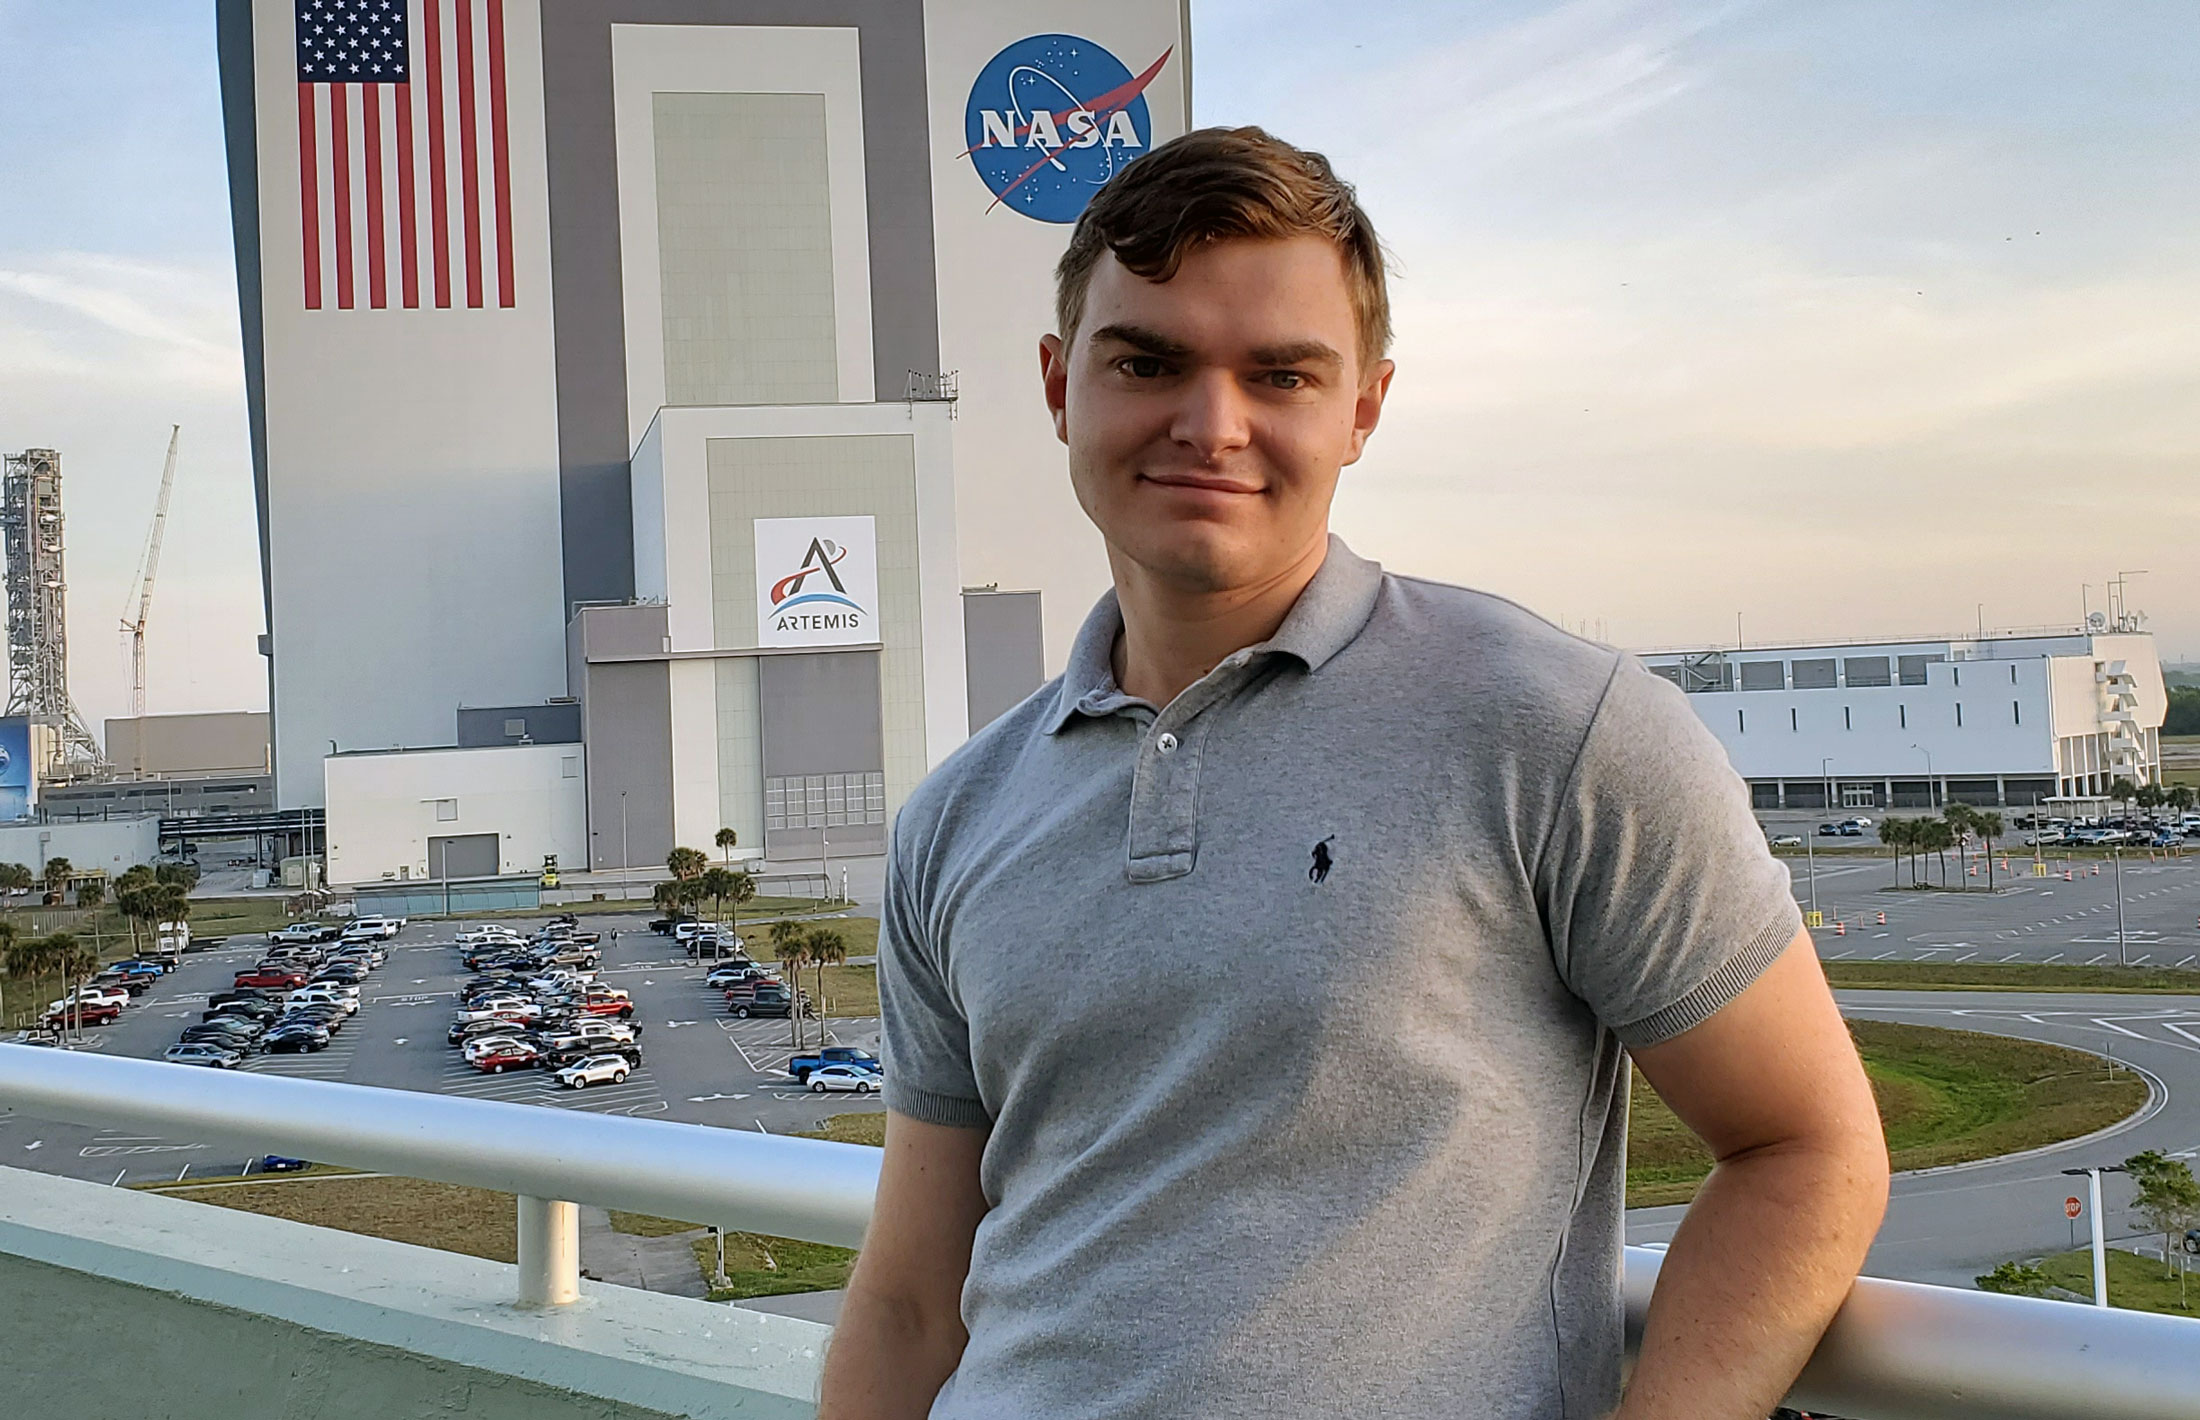 Alum launches software development career with NASA internship